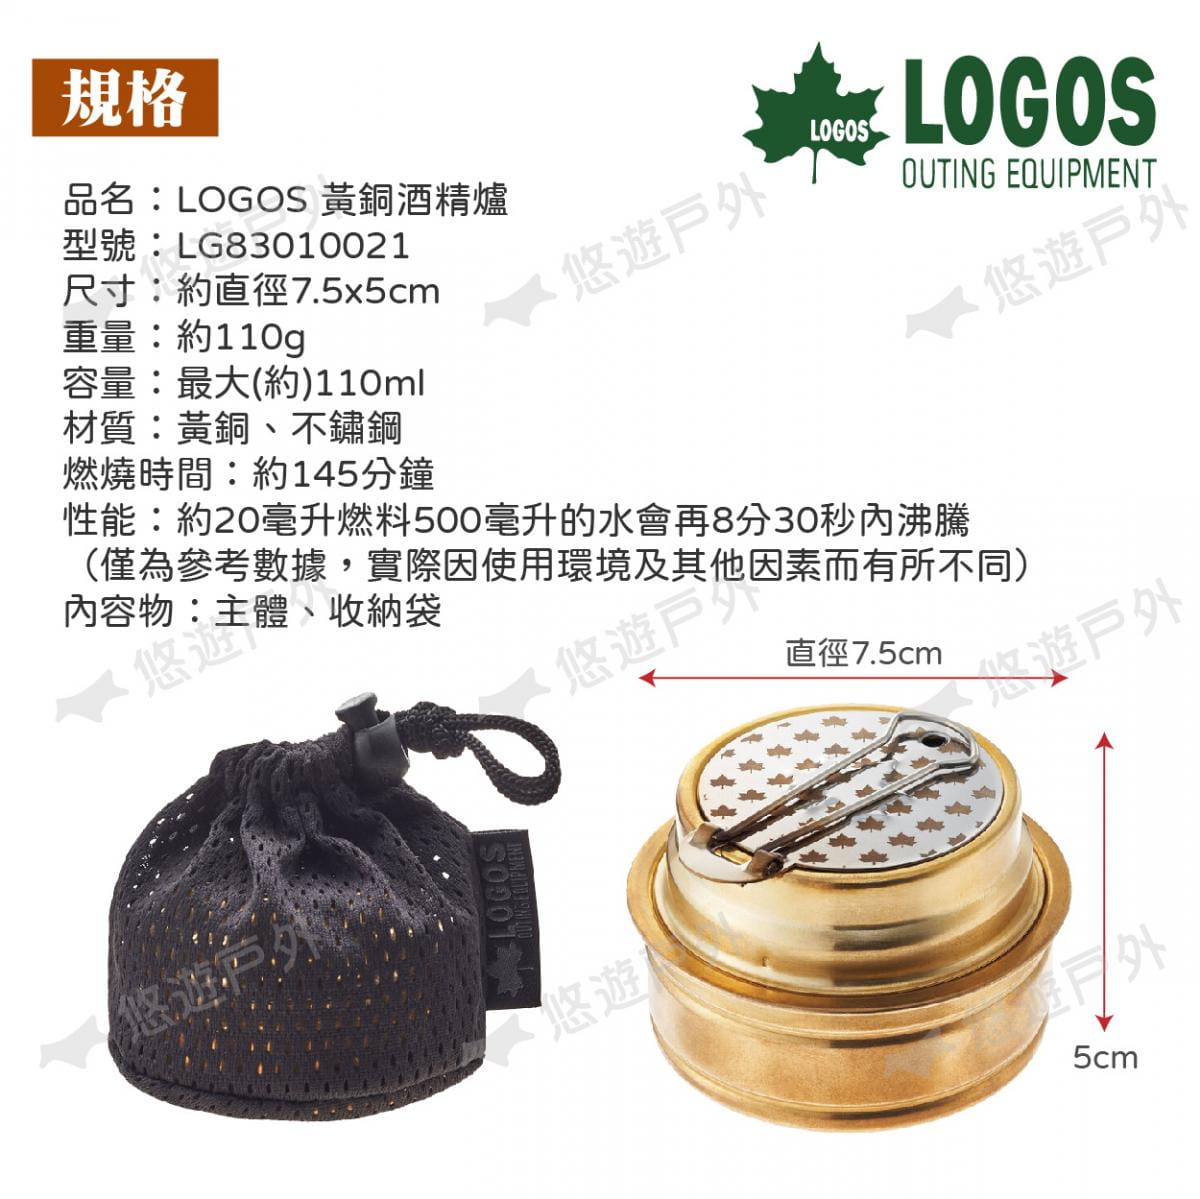 【LOGOS】黃銅酒精爐 LG83010021 (悠遊戶外) 6